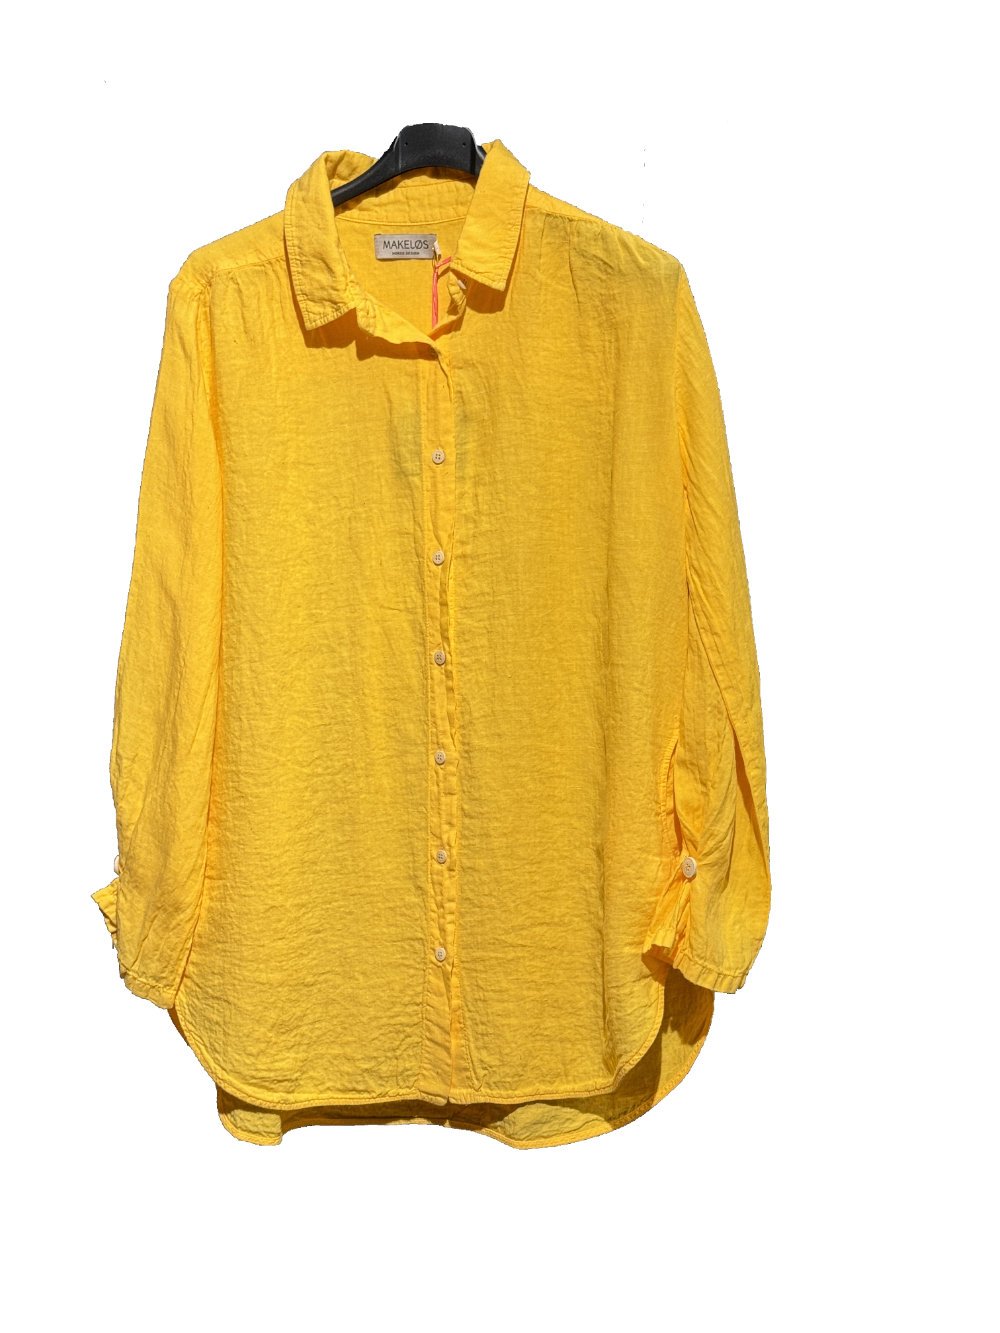 Skjorte i 100% lin - gul - Lindesnes - Many Colors